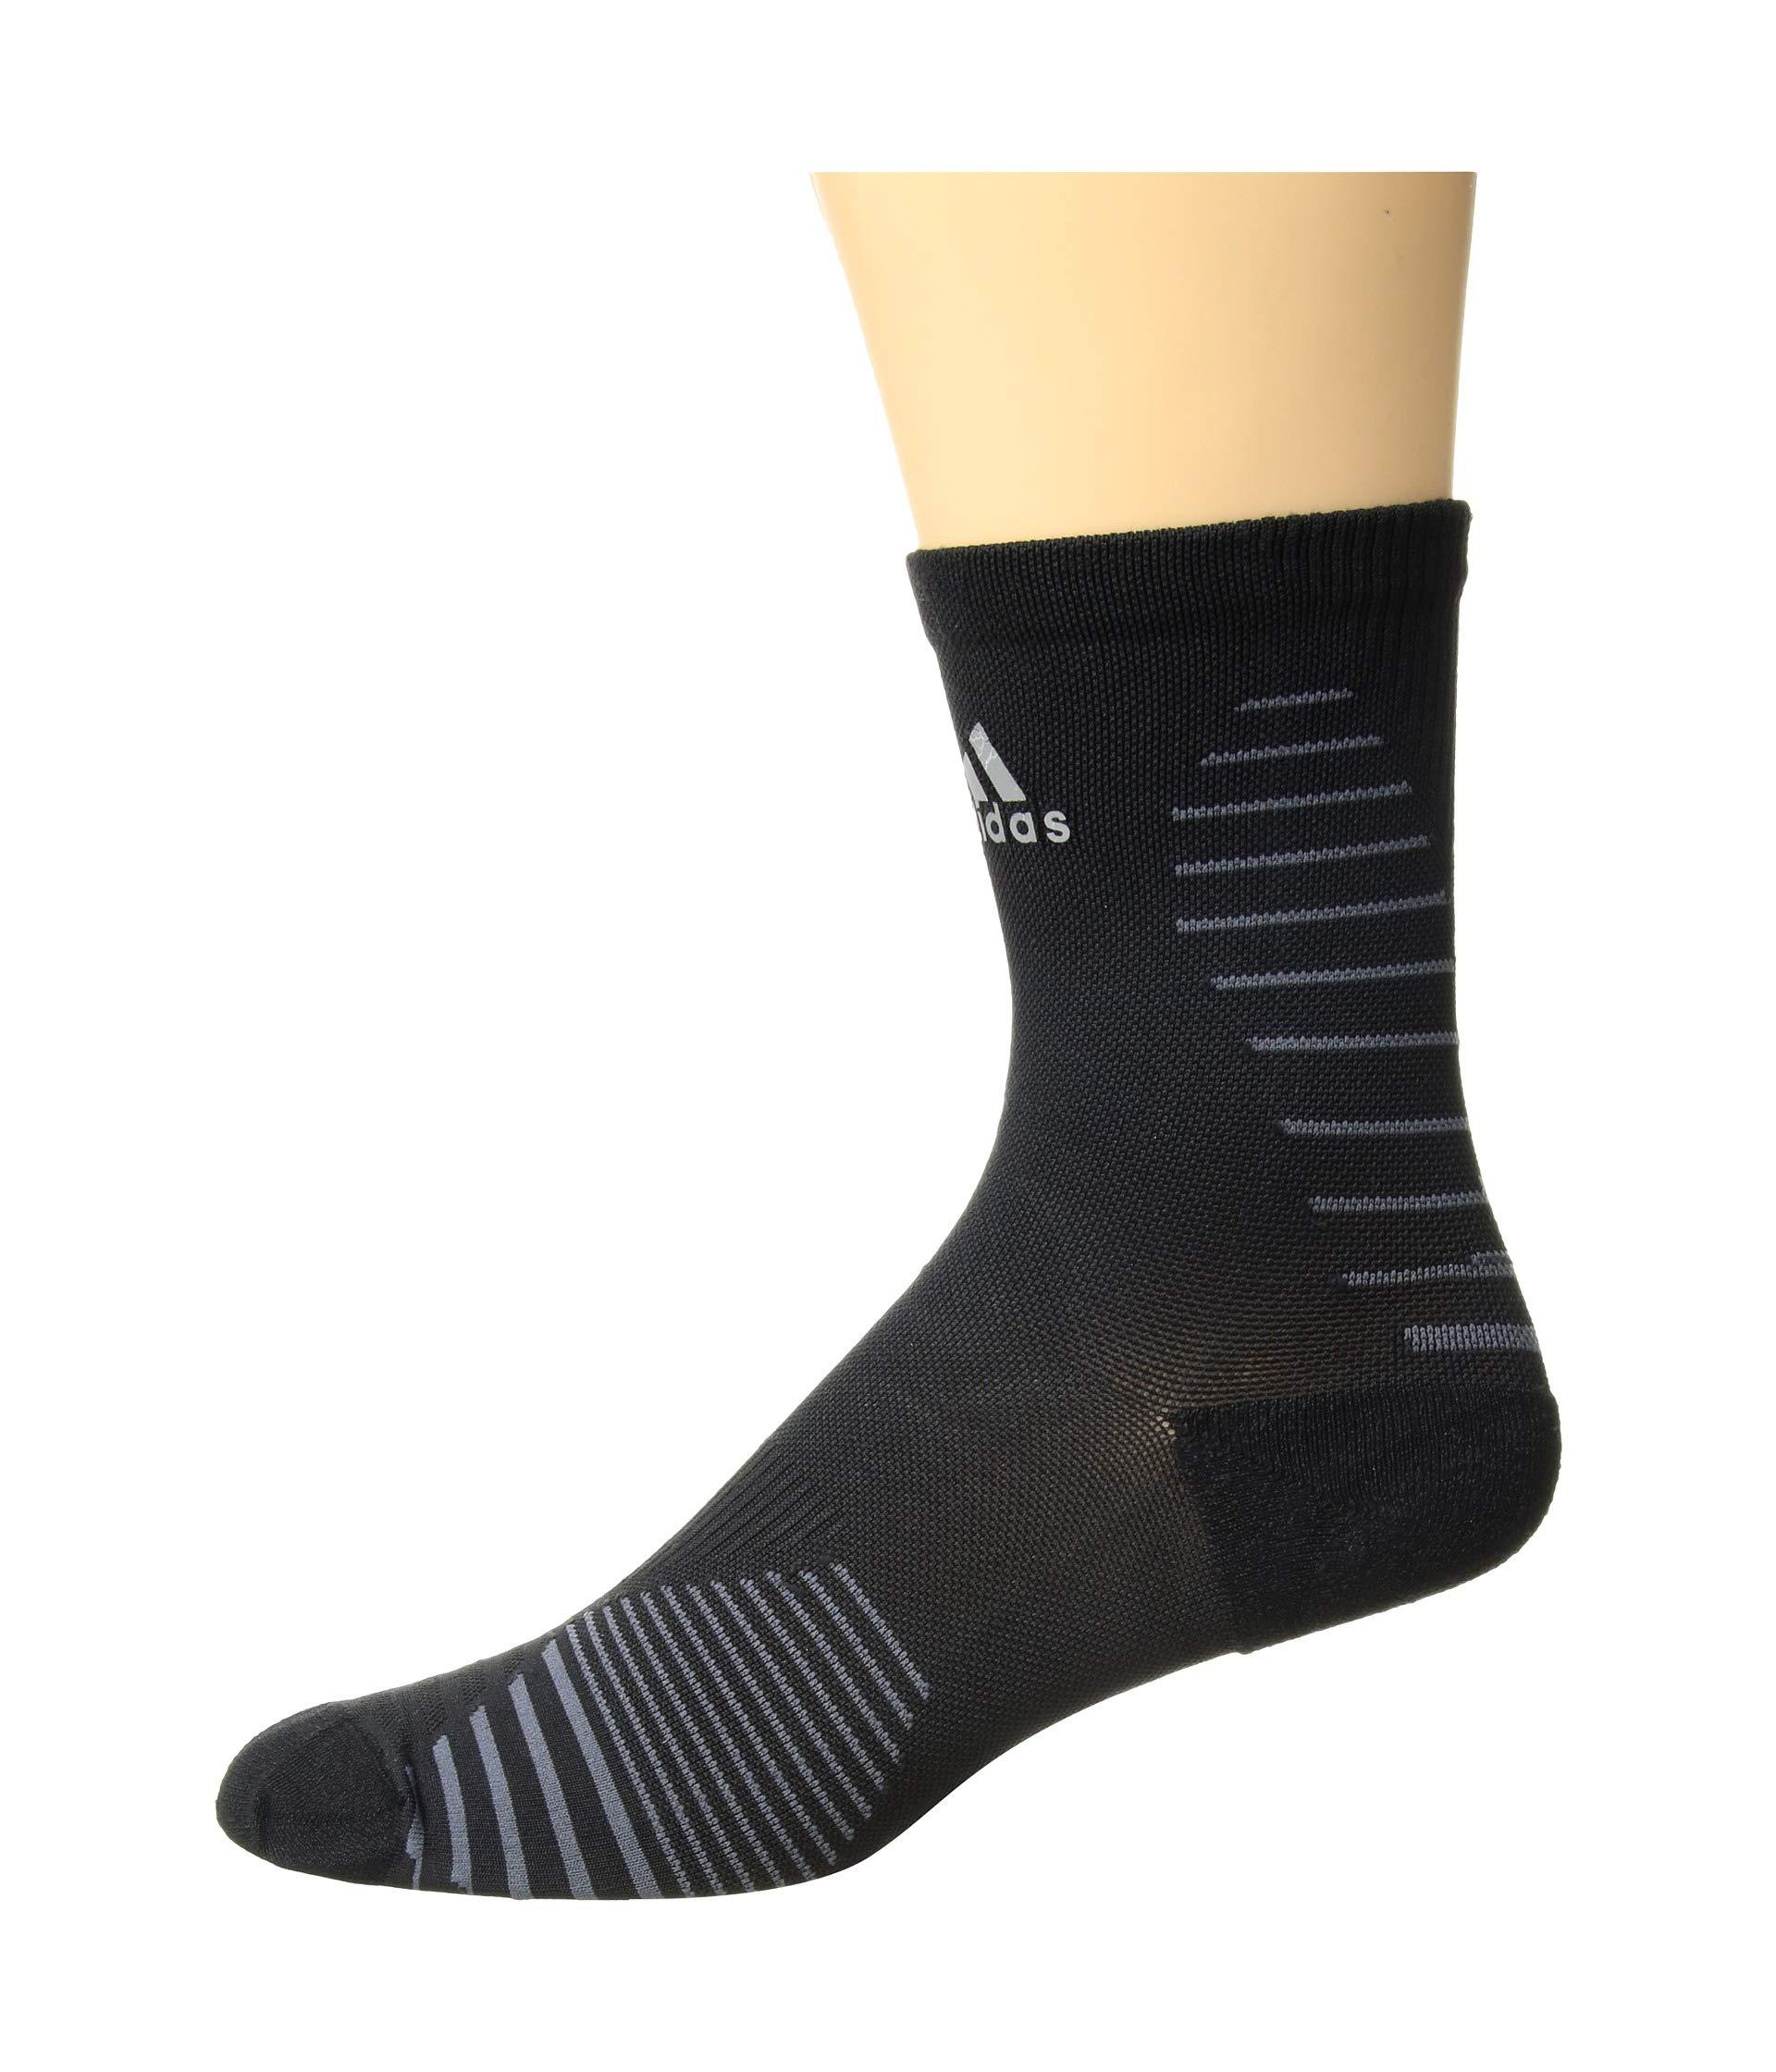 Lyst adidas Running Midcrew Sock Single (white/light